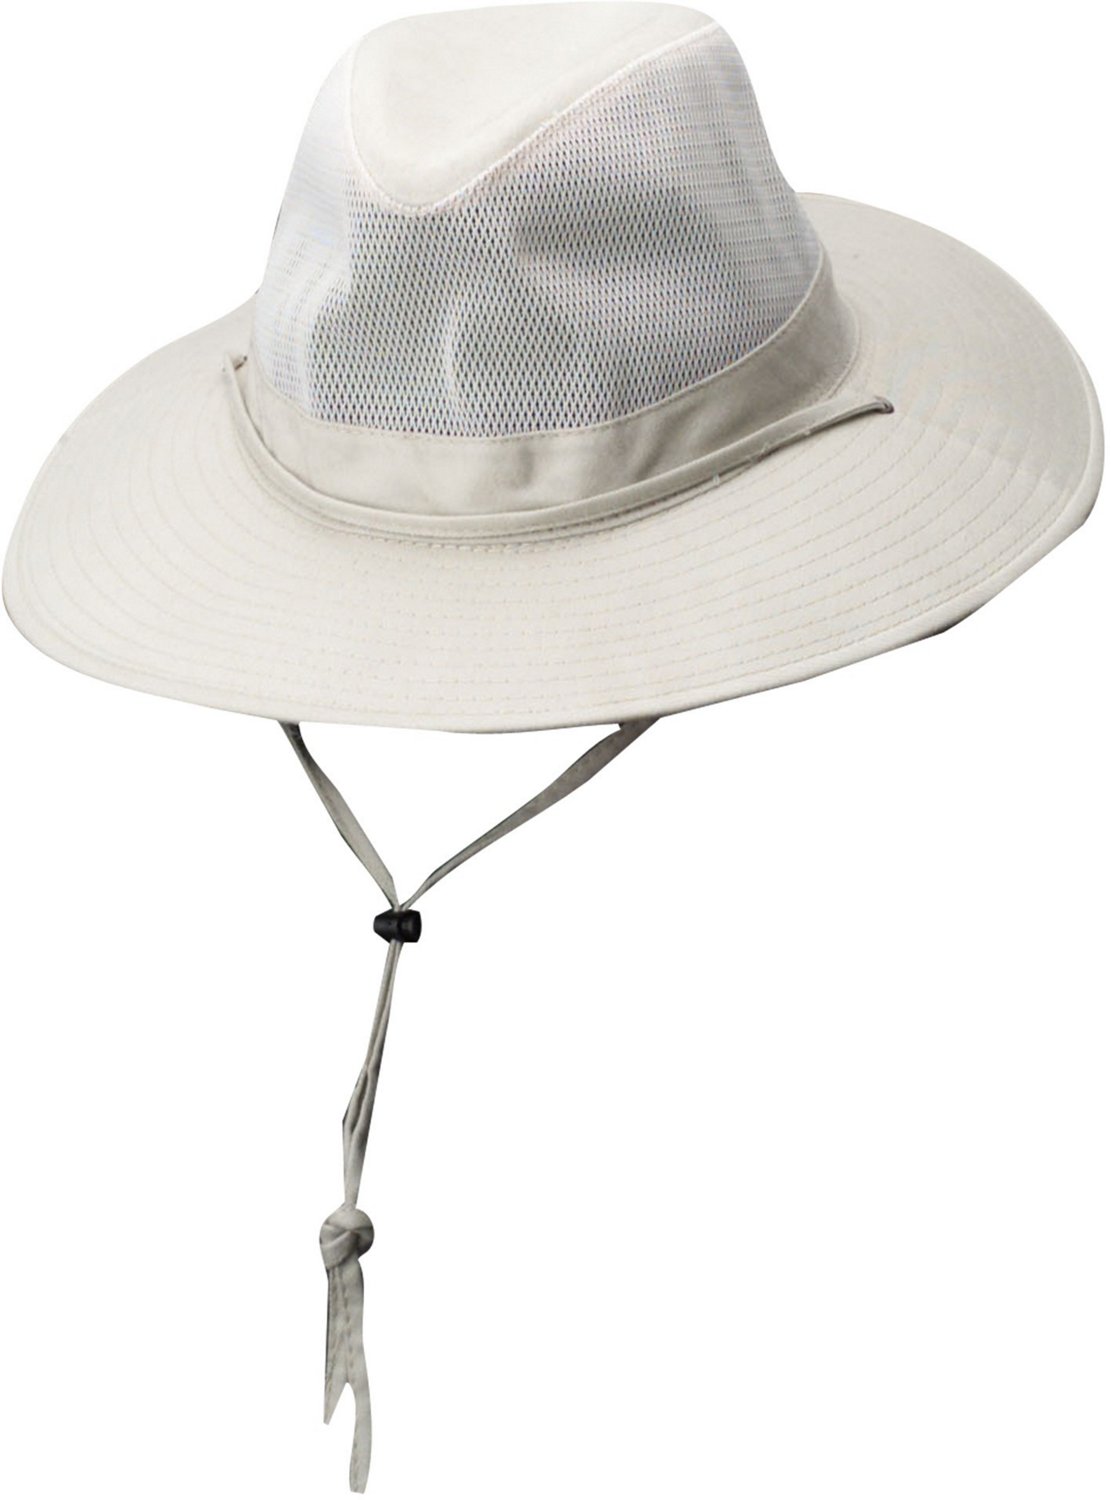 Academy Sports + Outdoors Dorfman Pacific Men's Solarweave Cotton Safari Hat